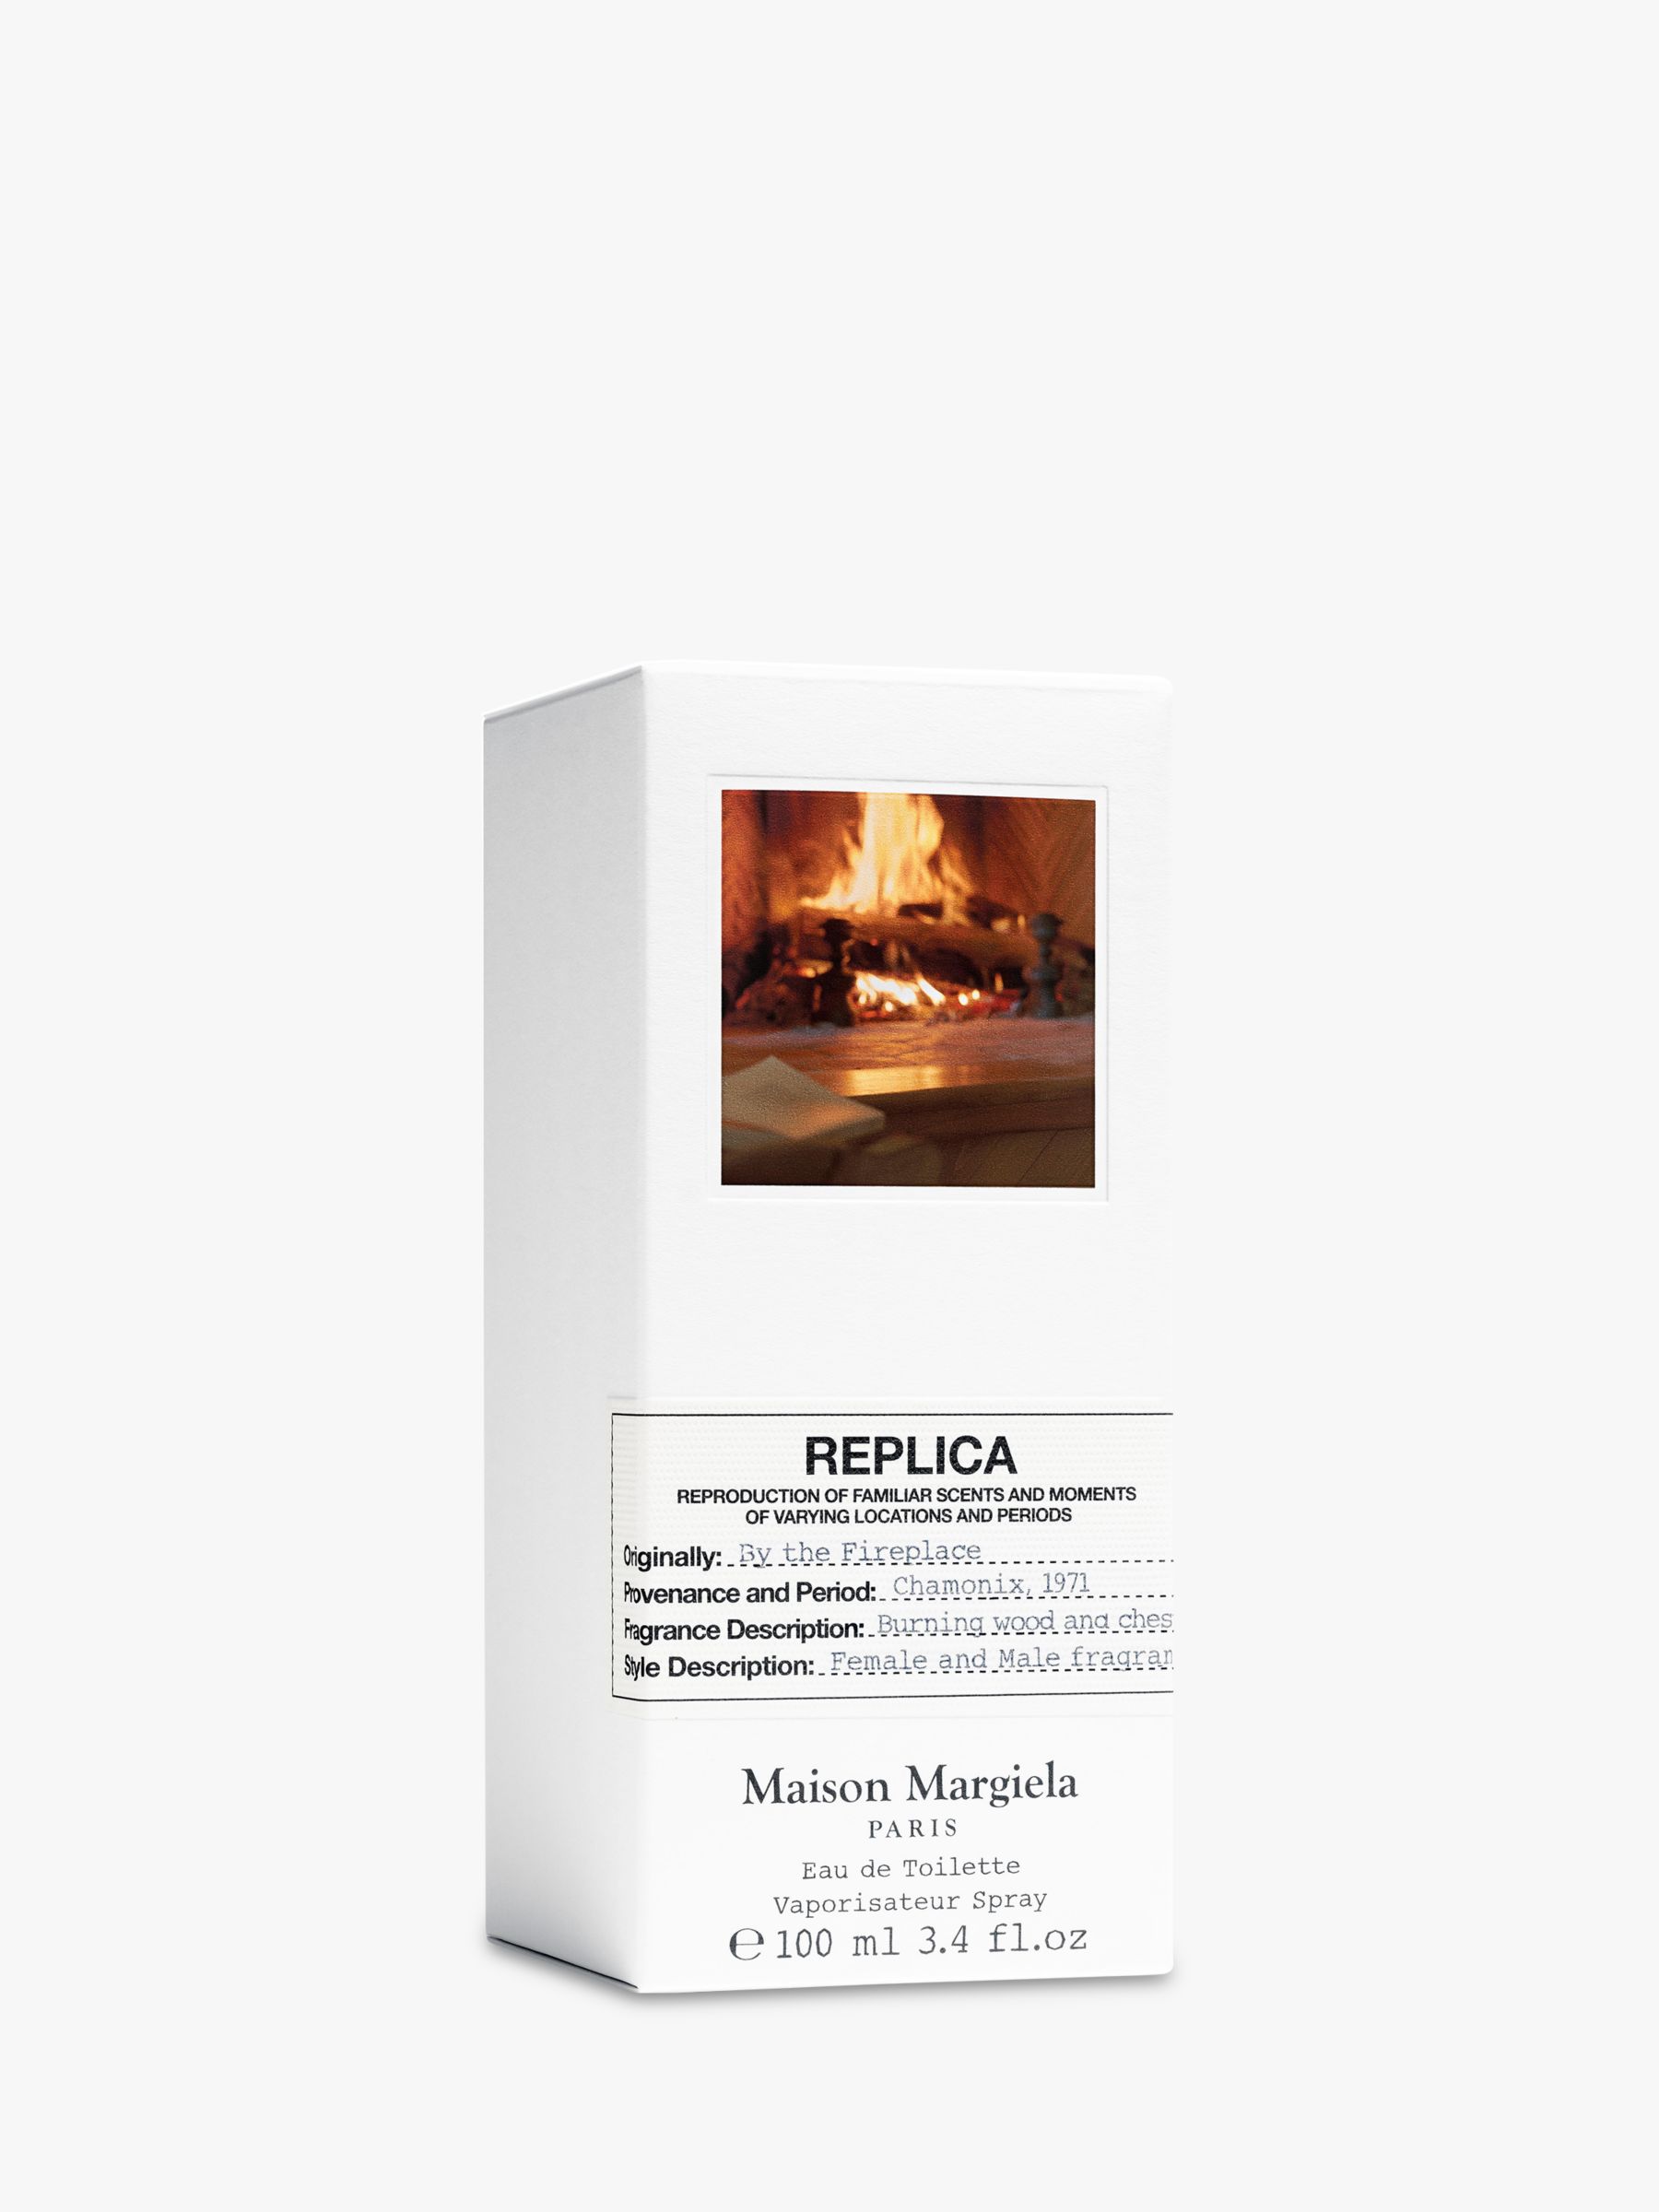 Maison Margiela Replica By The Fireplace Eau de Toilette, 100ml